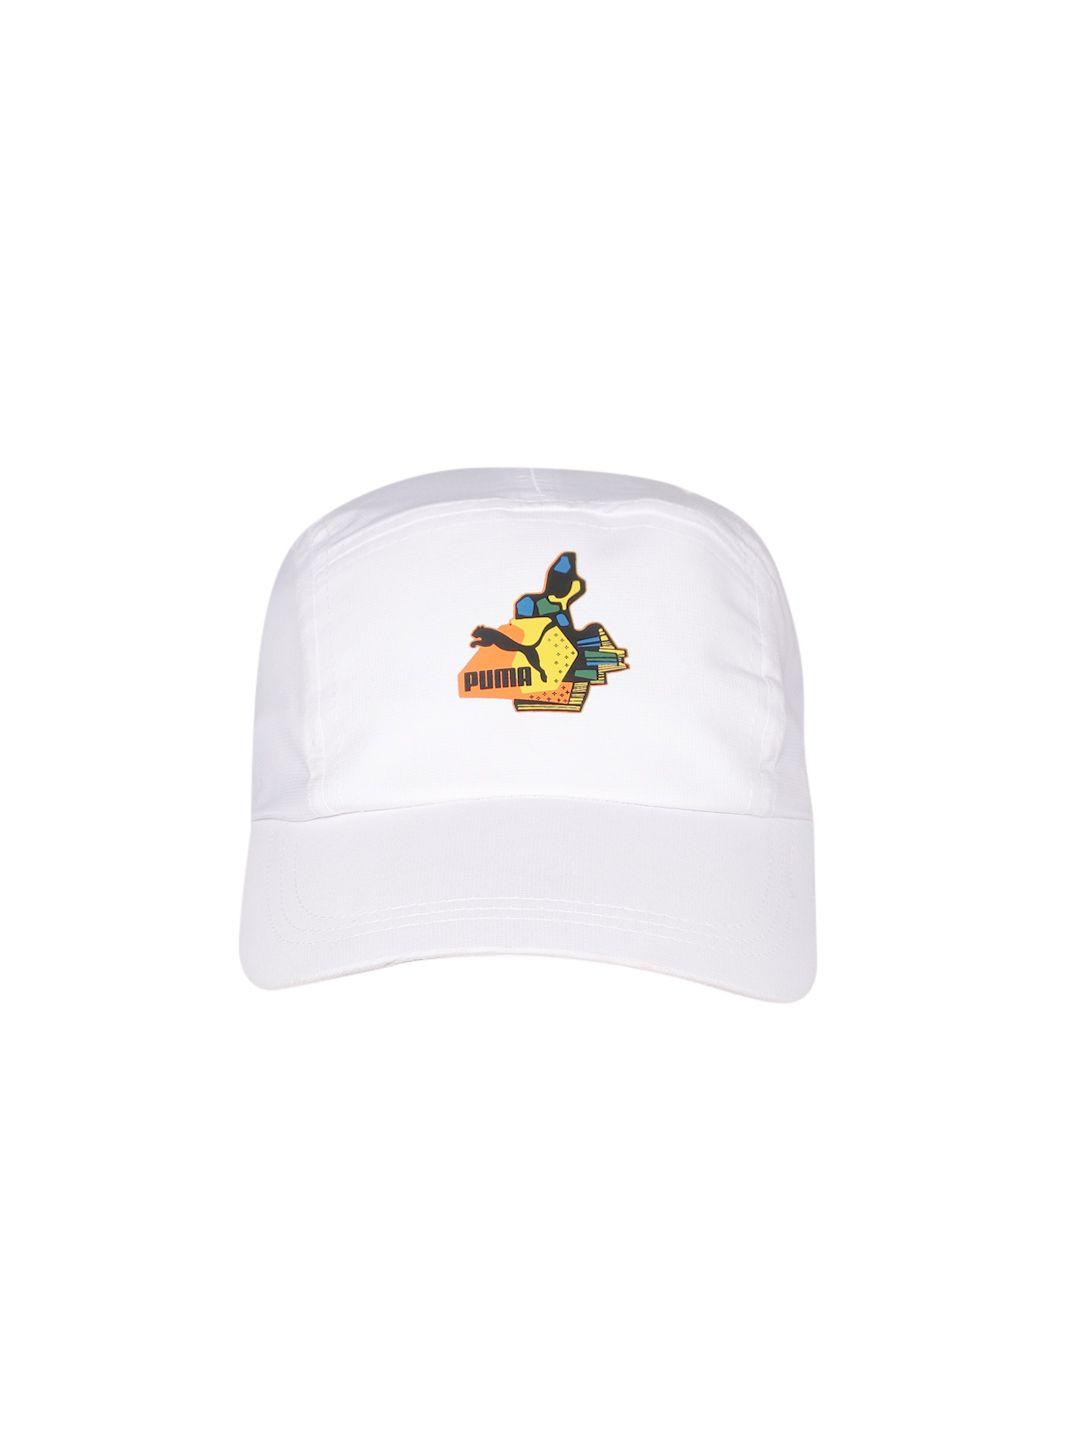 puma unisex brand logo & graphic print baseball cap